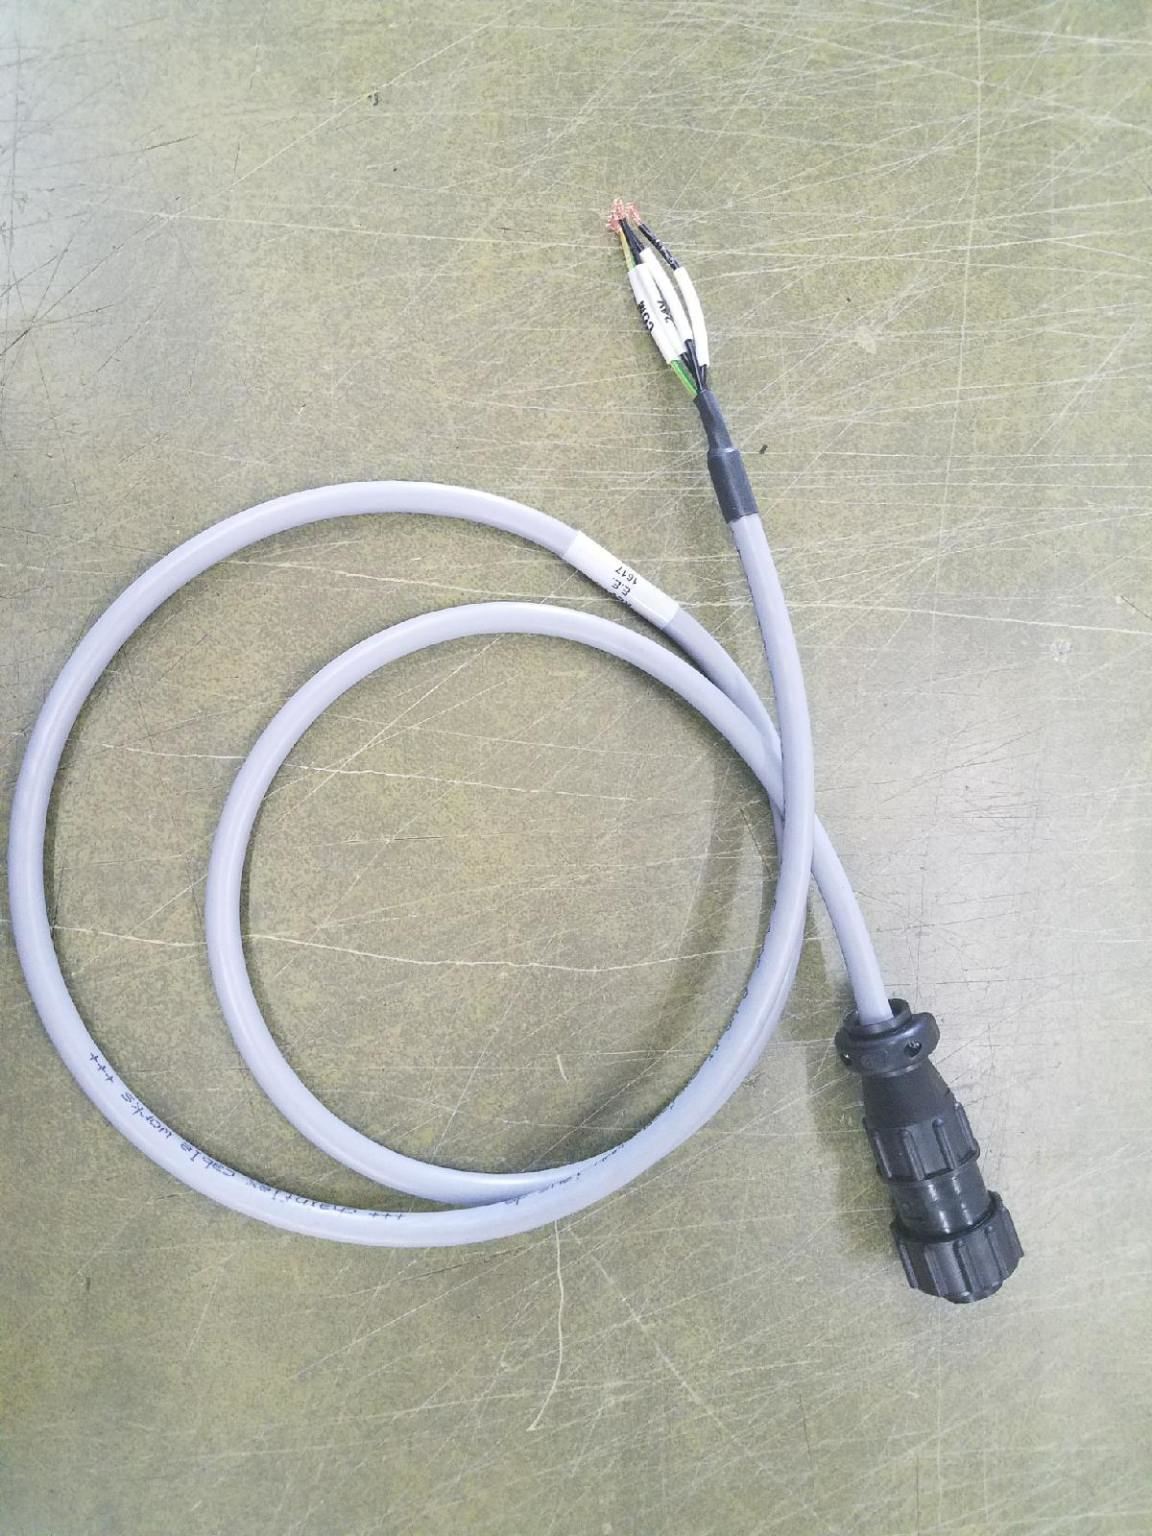 L4T connector harness 1M